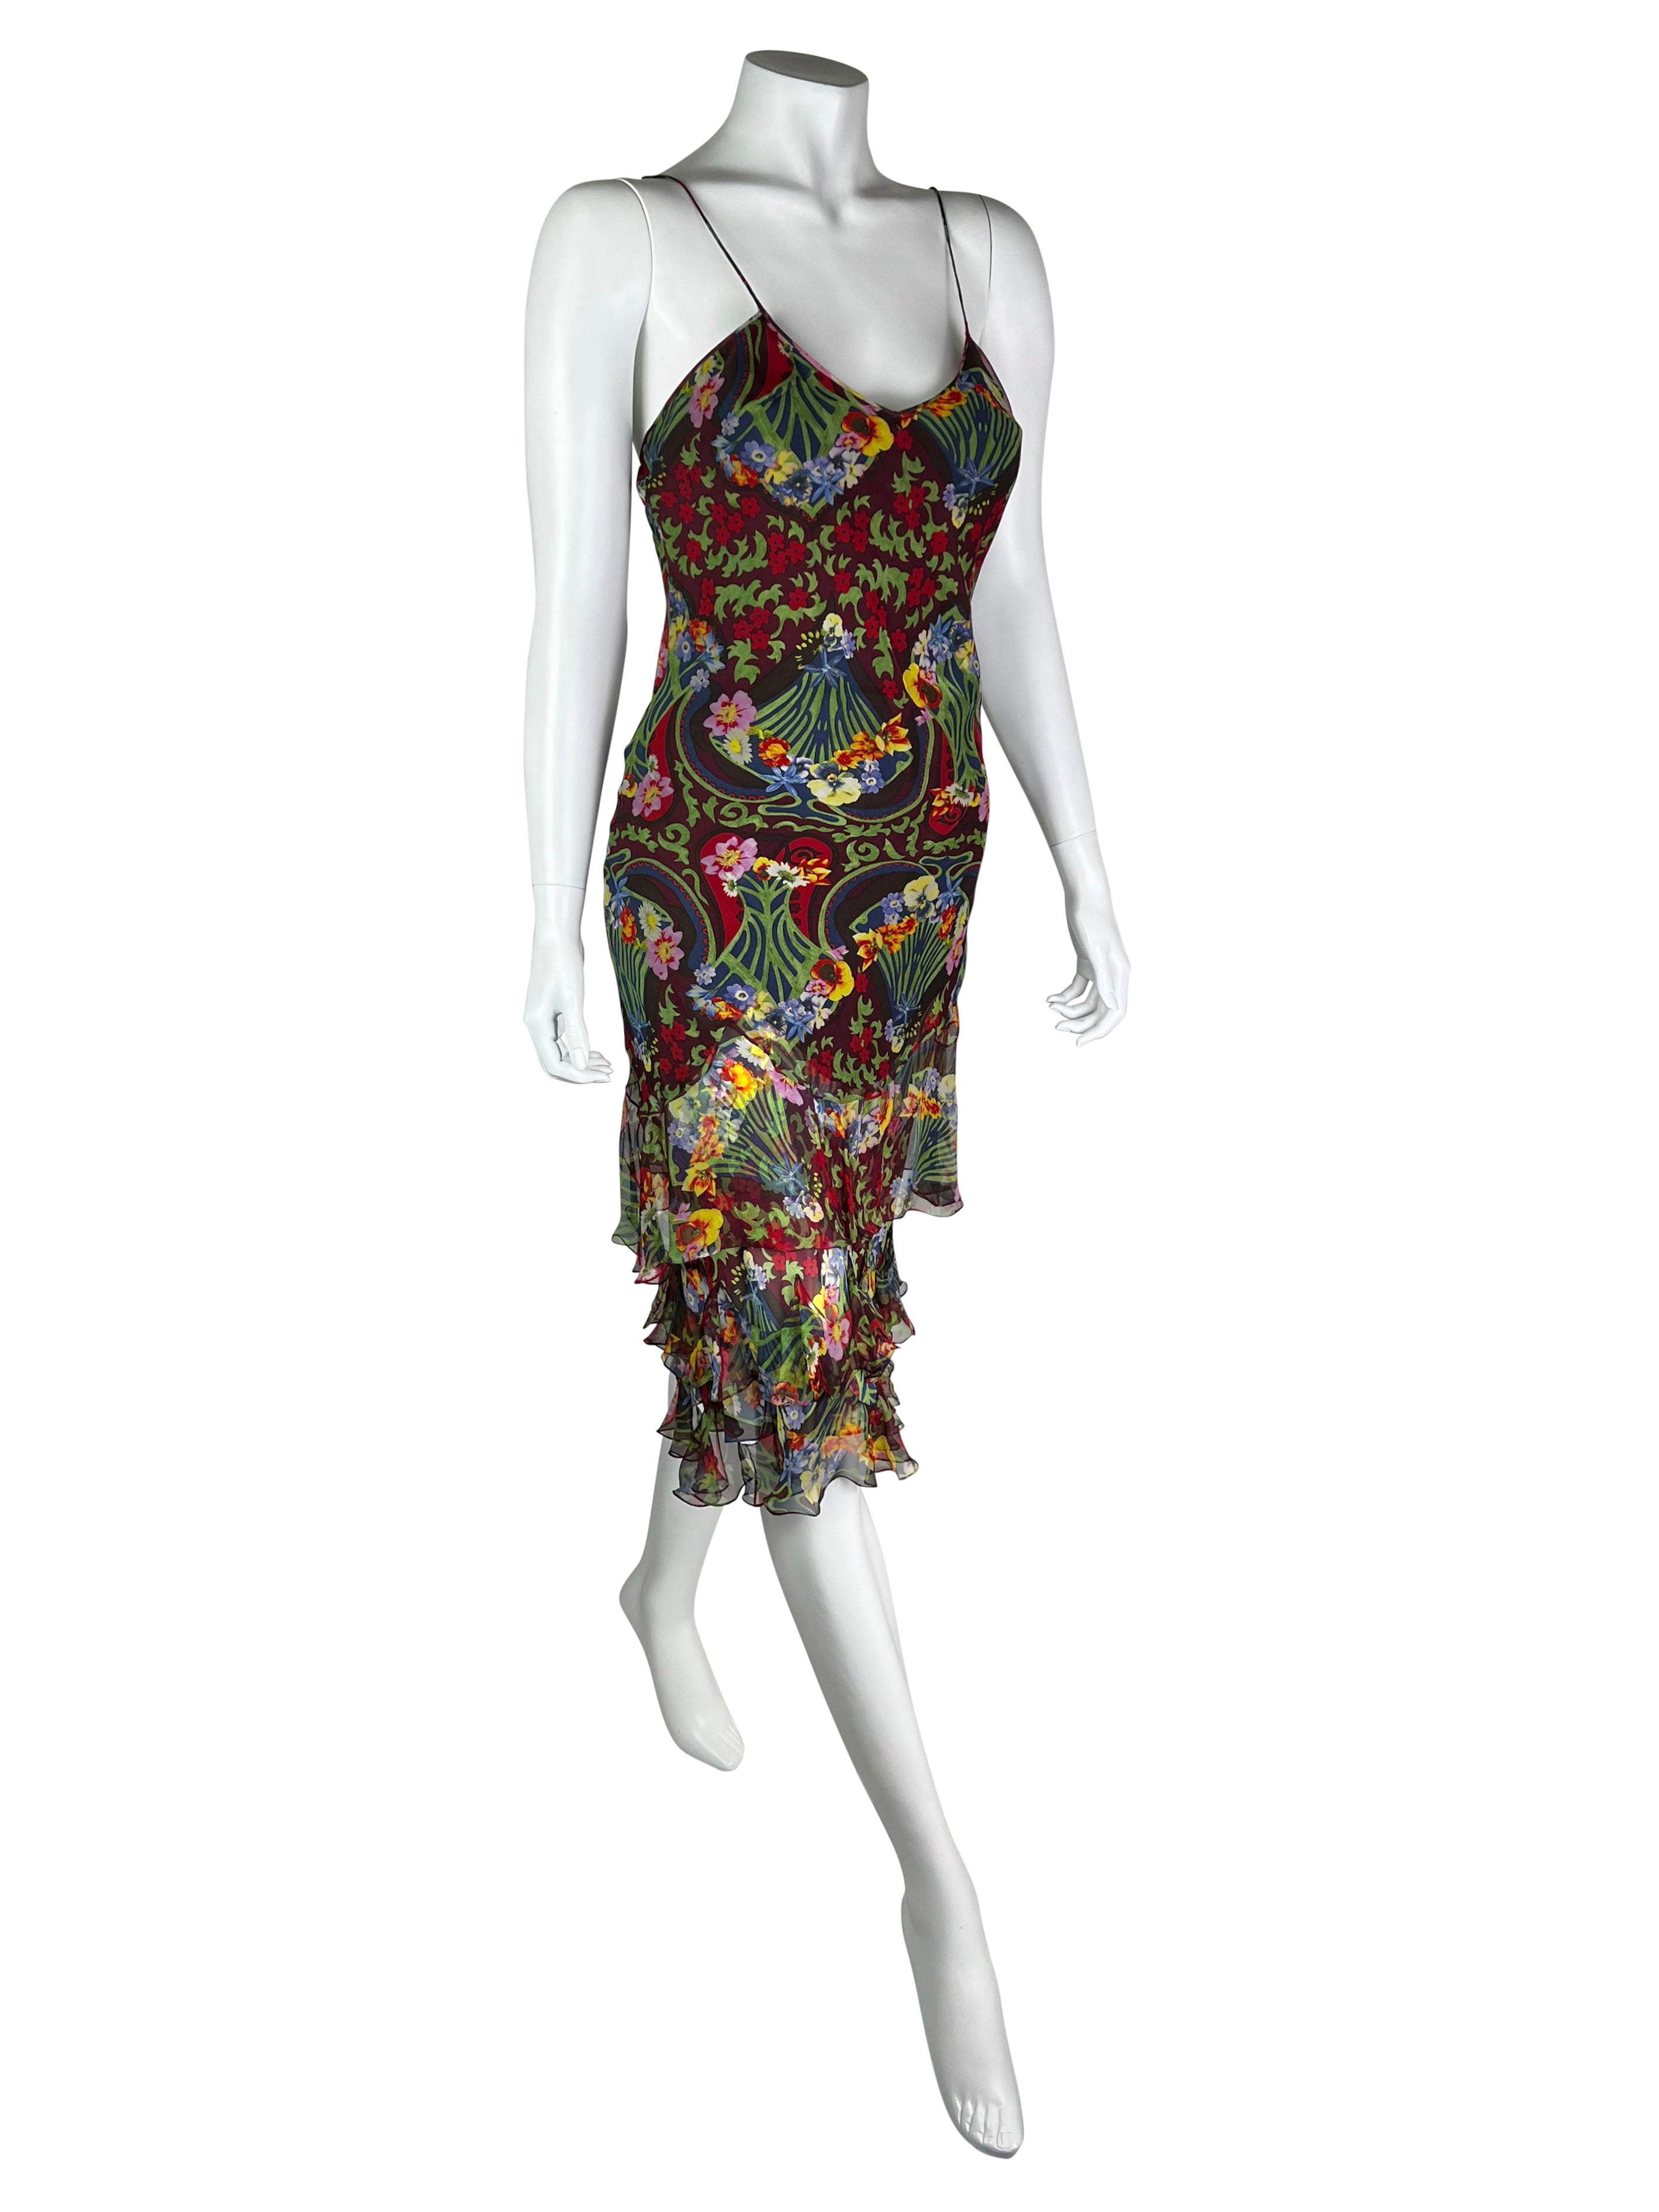 Dior by John Galliano Fall 2005 Silk Ruffle Dress